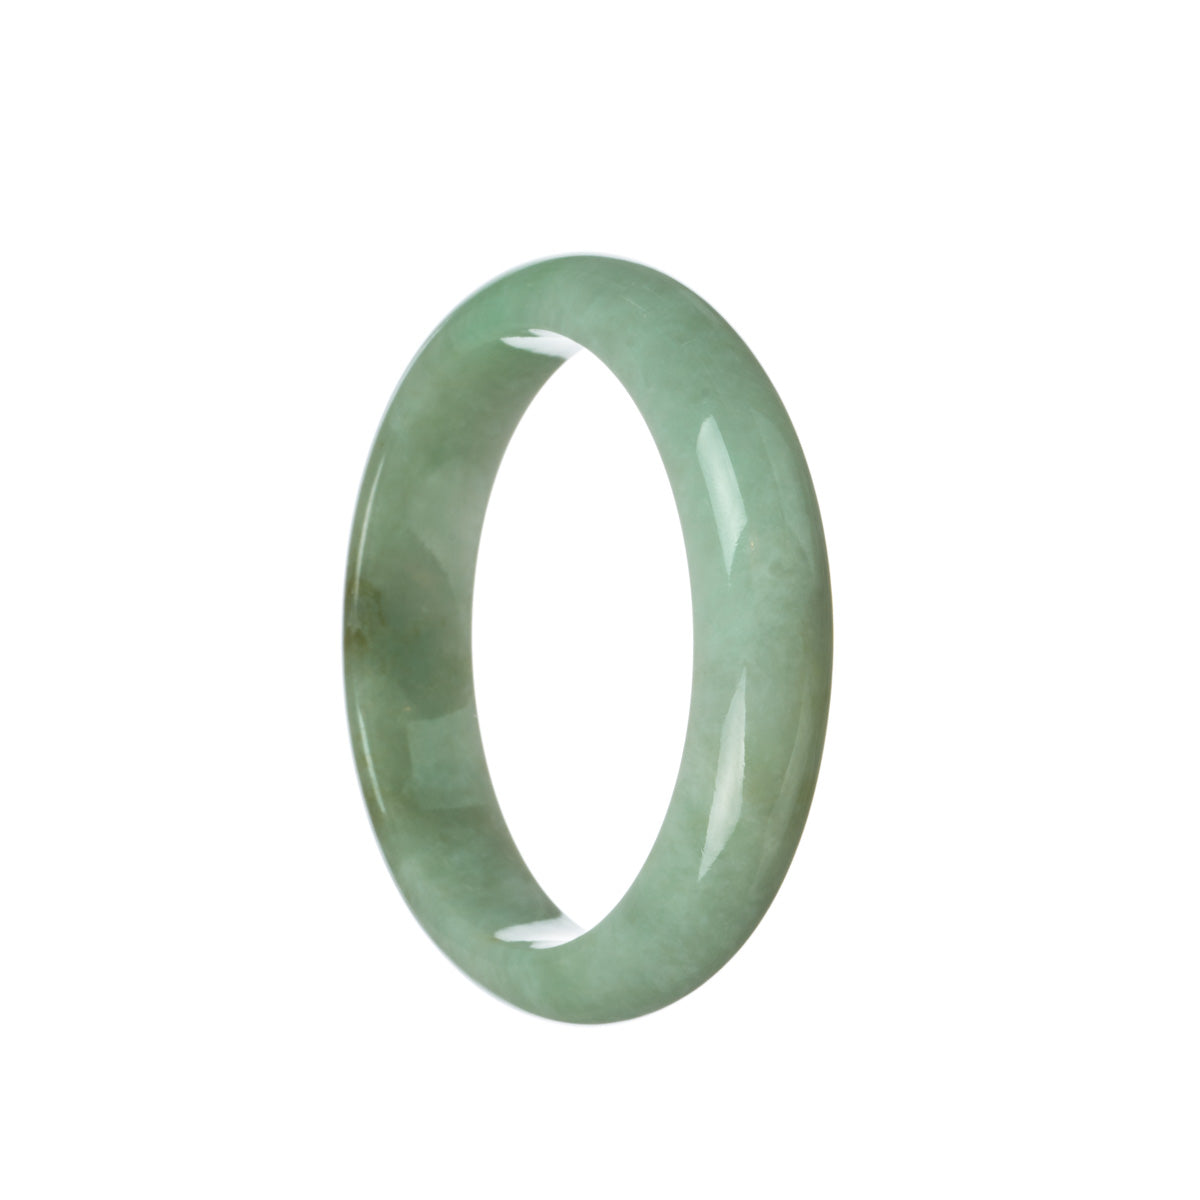 A light green half moon-shaped jade bangle bracelet with a 58mm diameter.